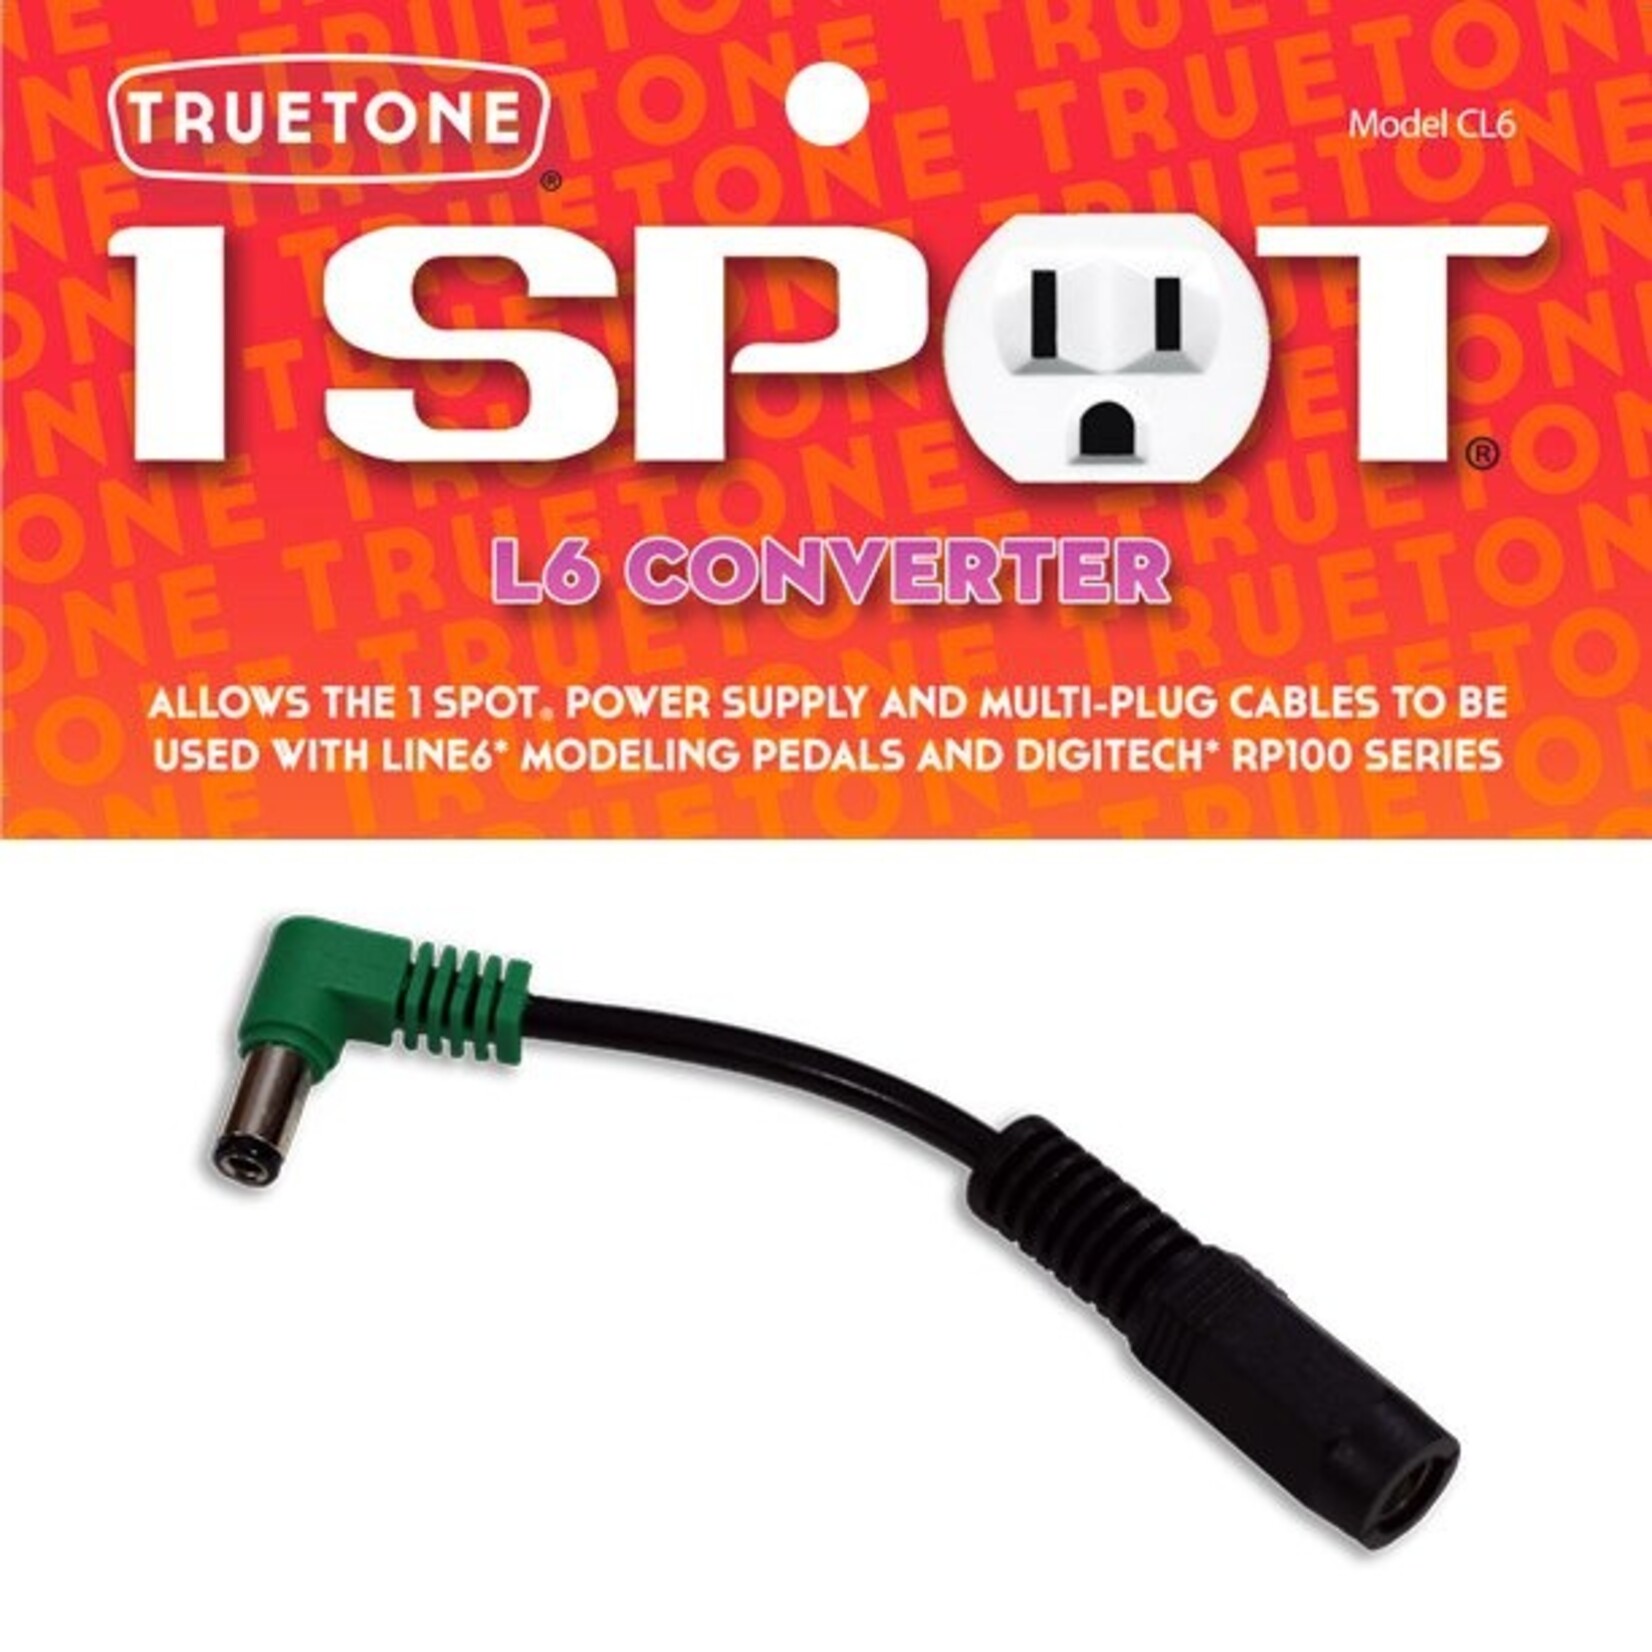 Truetone 1 Spot L6 Convertor